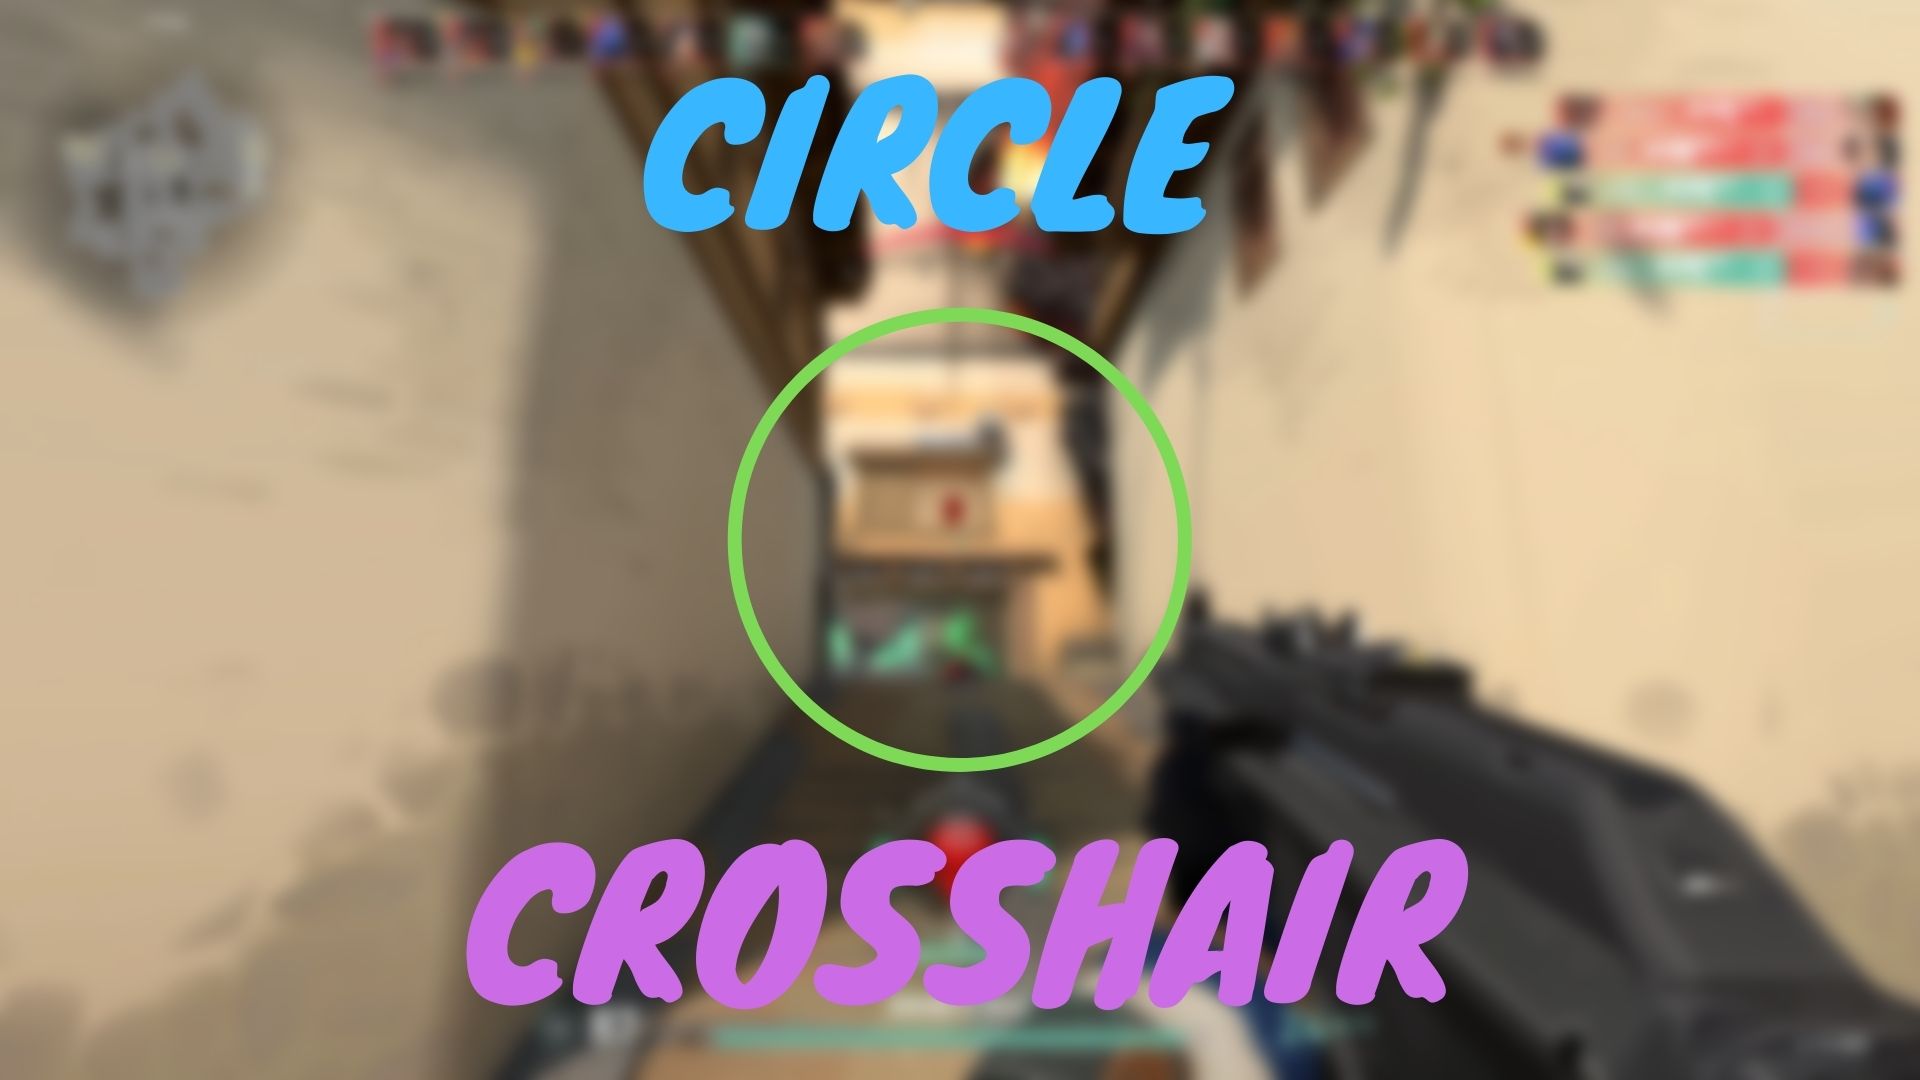 best circle crosshair valorant